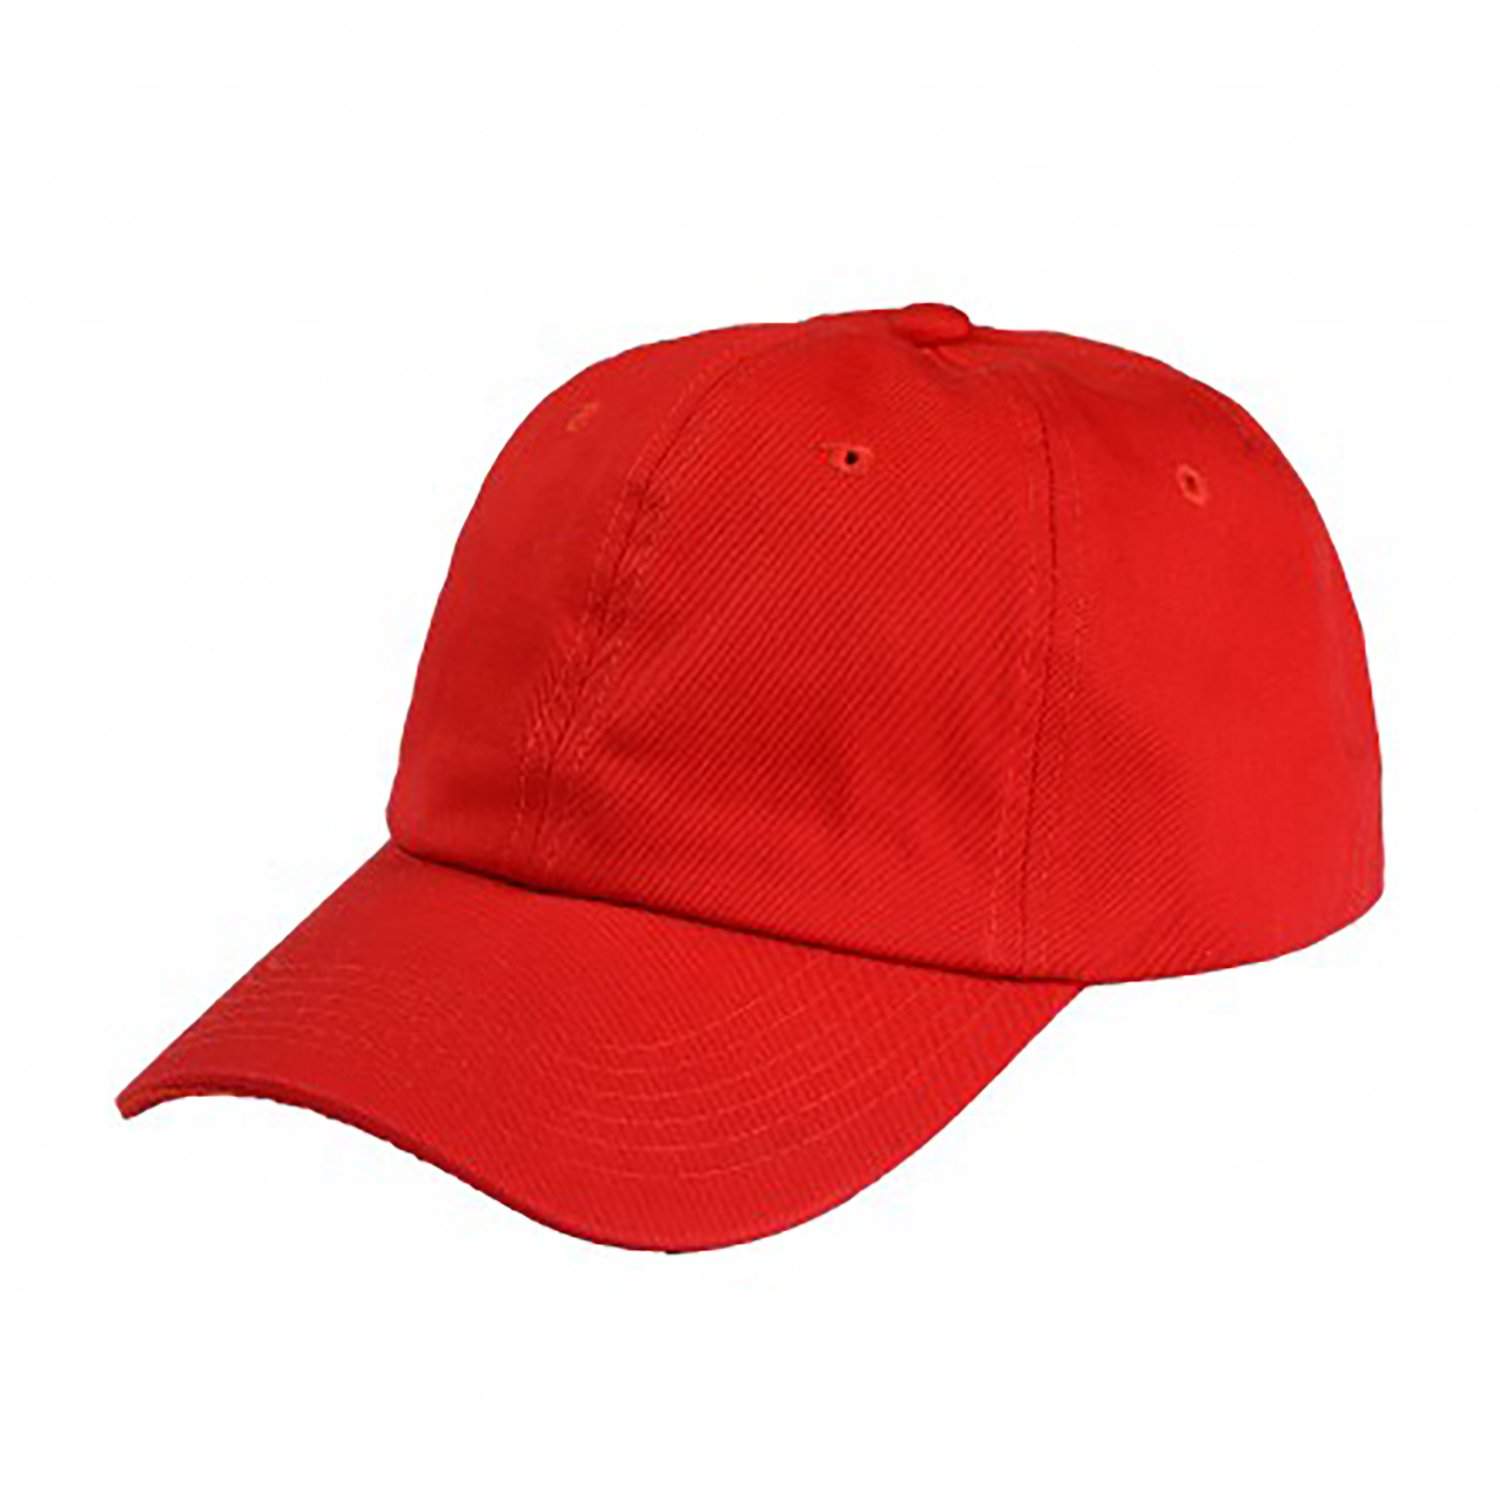 Qraftsy Bulk Pack of 6 Cotton Dad Hat Cap